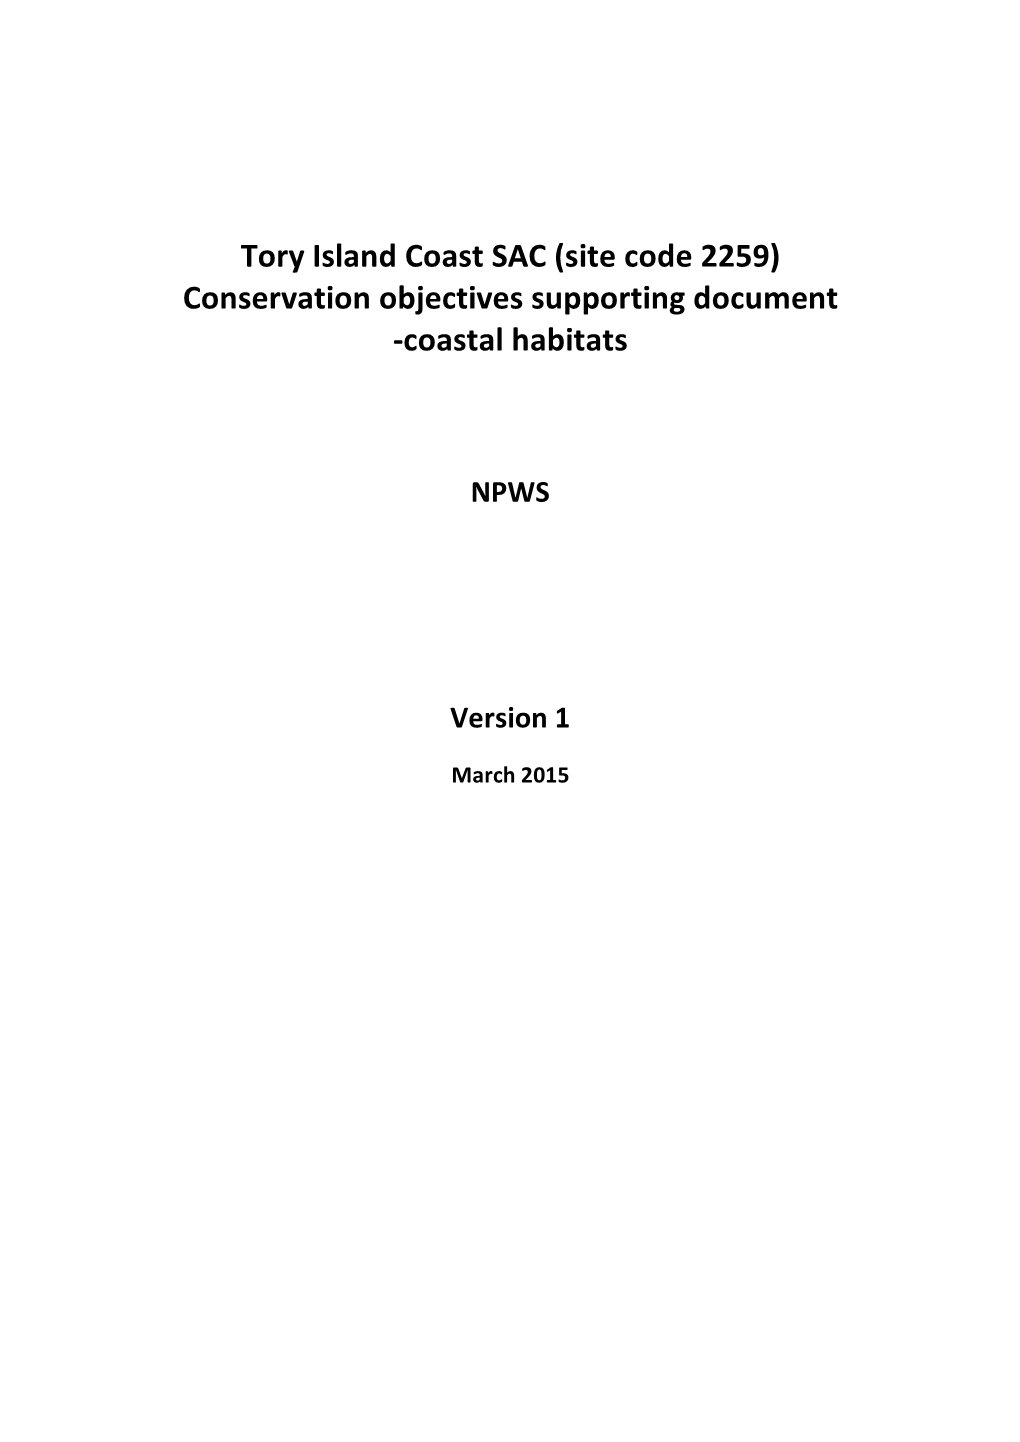 Tory Island Coast SAC (Site Code 2259) Conservation Objectives Supporting Document -Coastal Habitats